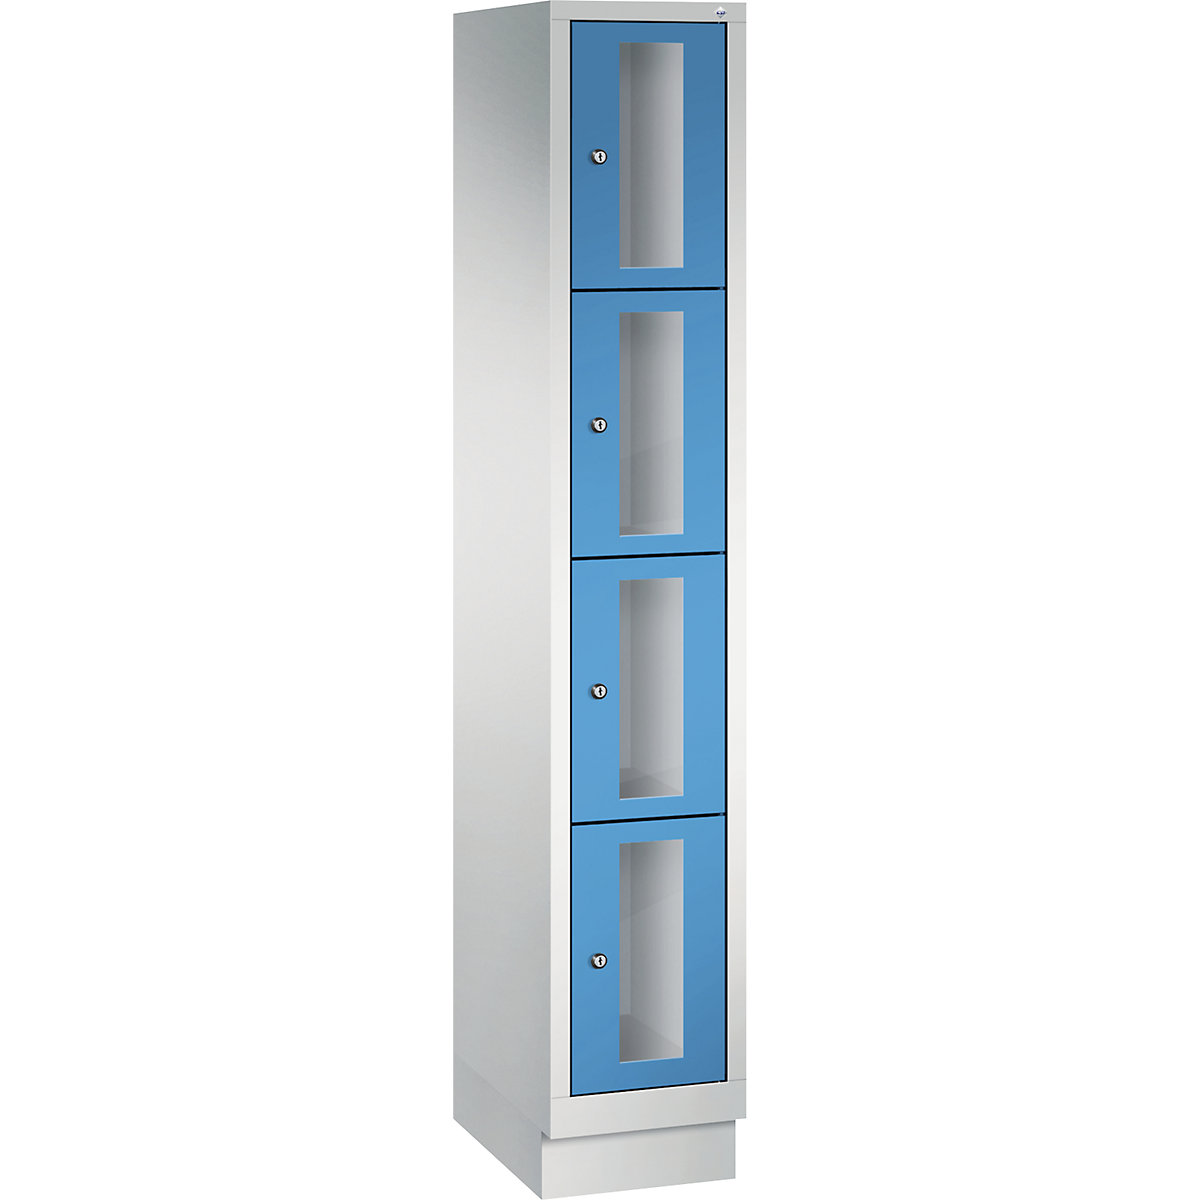 C+P – Armario de compartimentos CLASSIC, altura de compartimento 375 mm, con zócalo, 4 compartimentos, 320 mm de anchura, puerta en azul luminoso